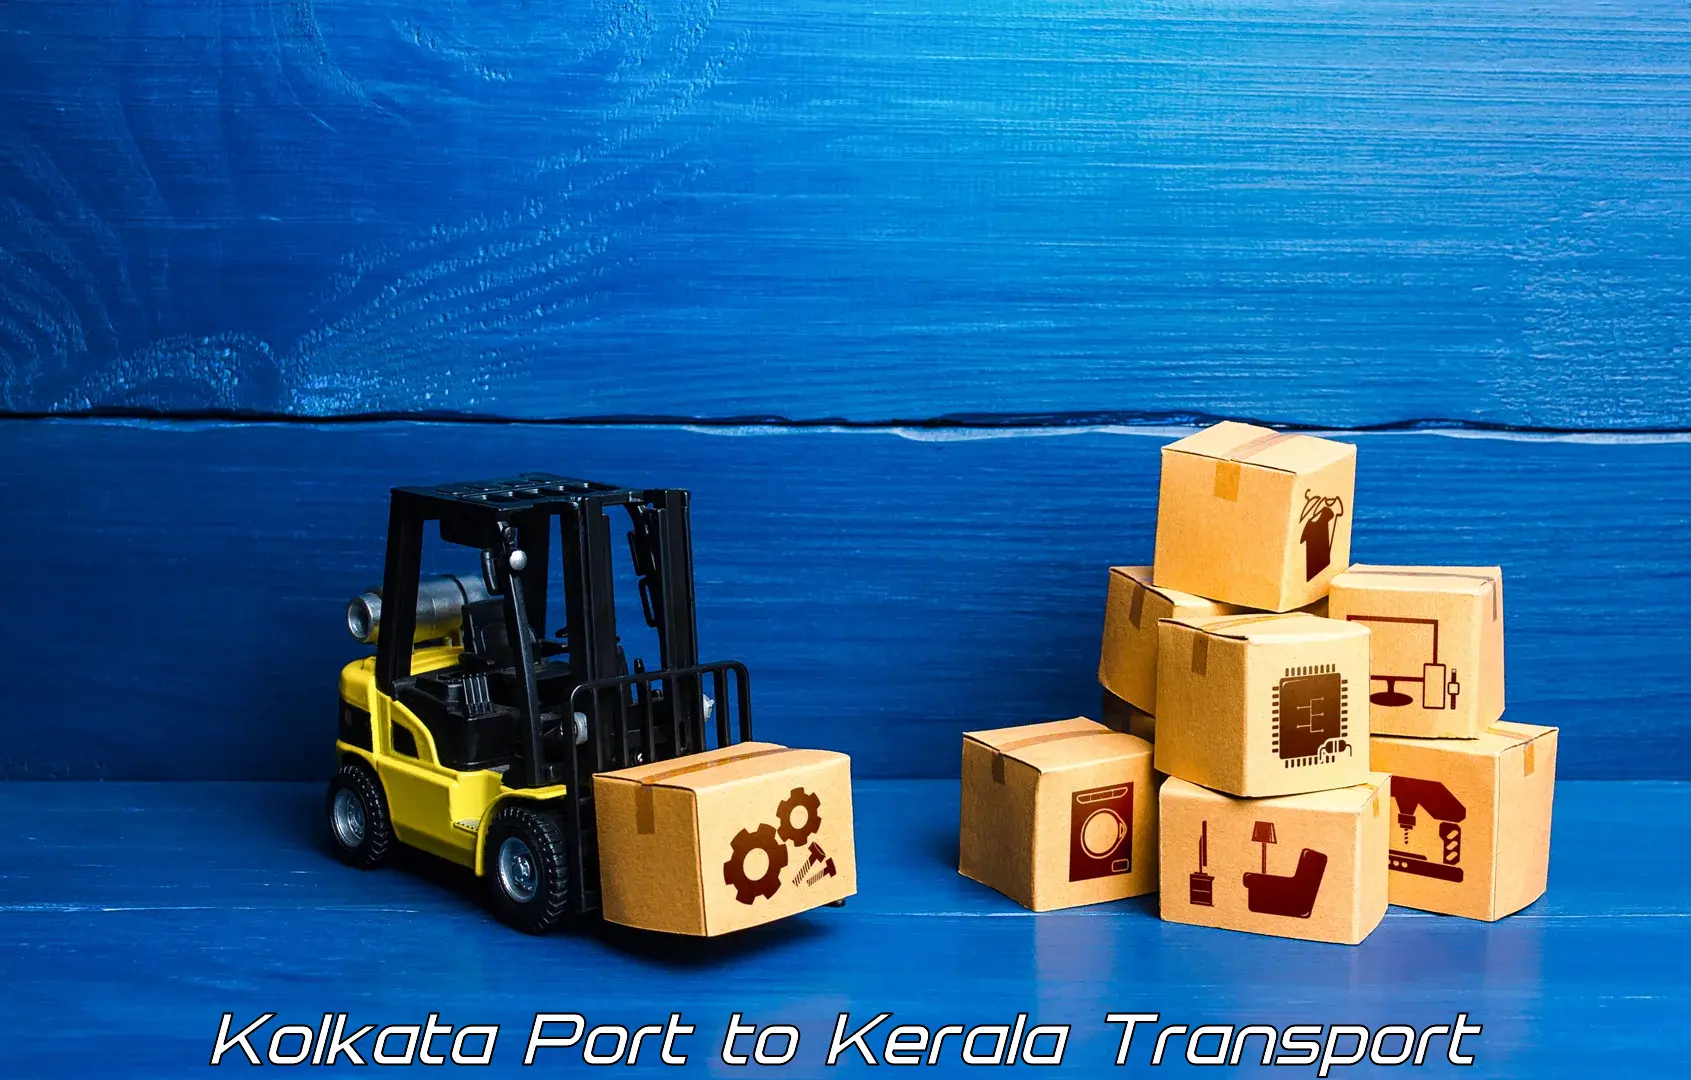 Goods delivery service Kolkata Port to Aluva